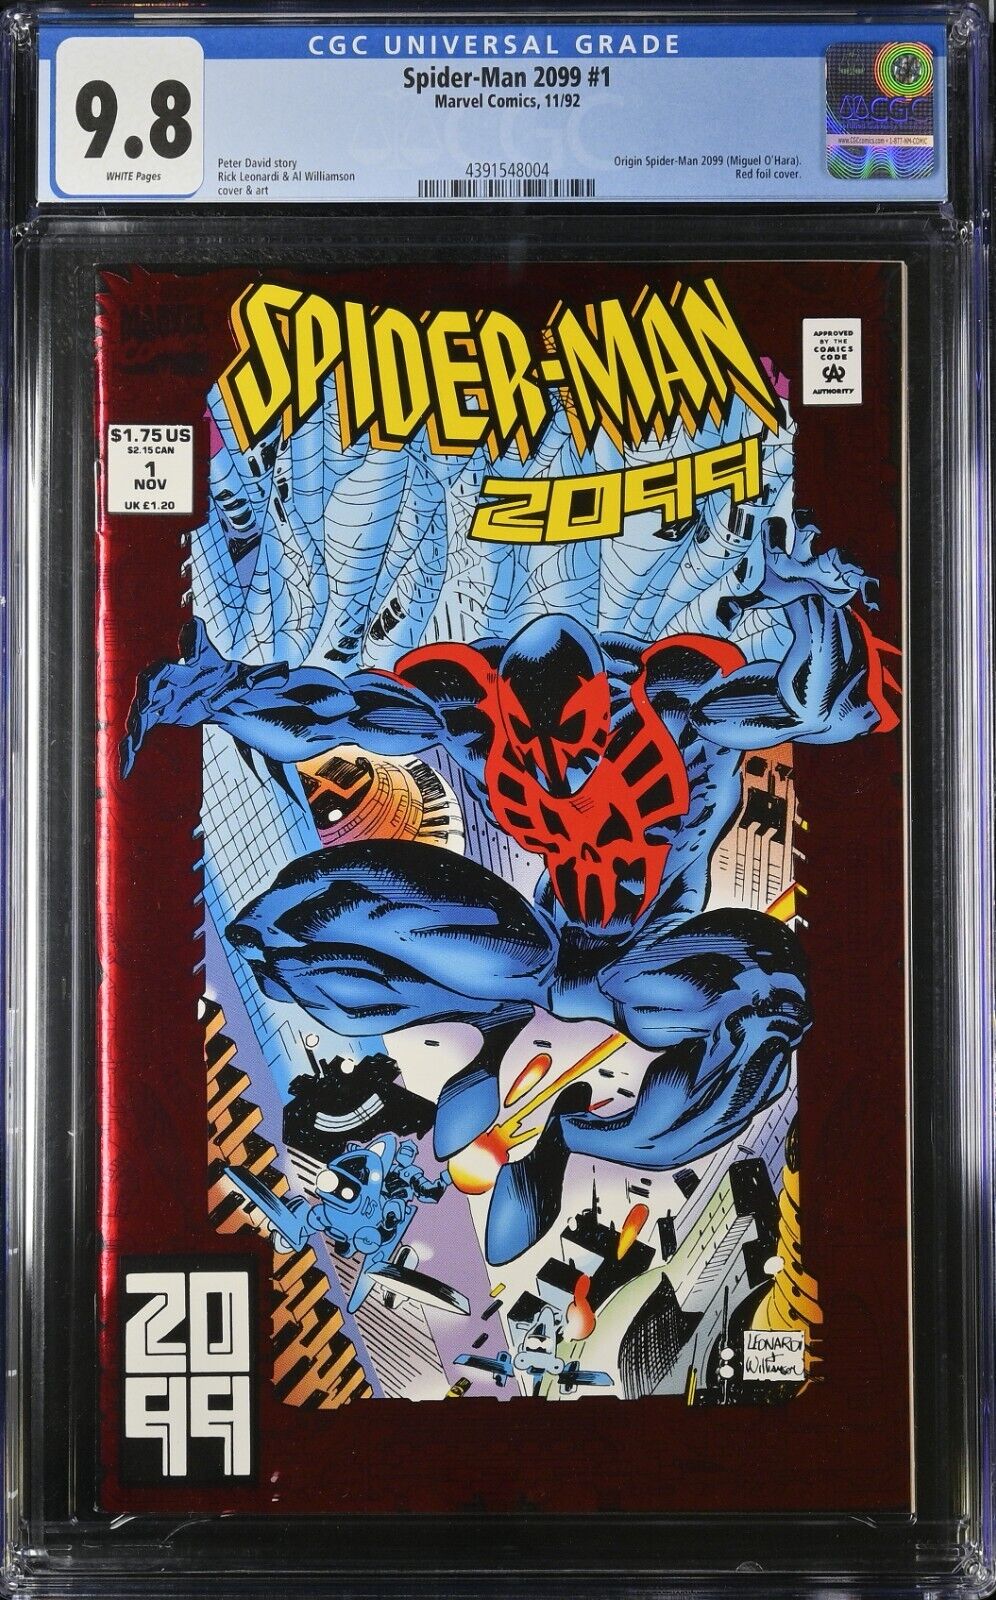 Spider-Man 2099 CGC 9.8 HOT 1st APP & Origin Red Foil NEW SLAB NO NEWTON RINGS